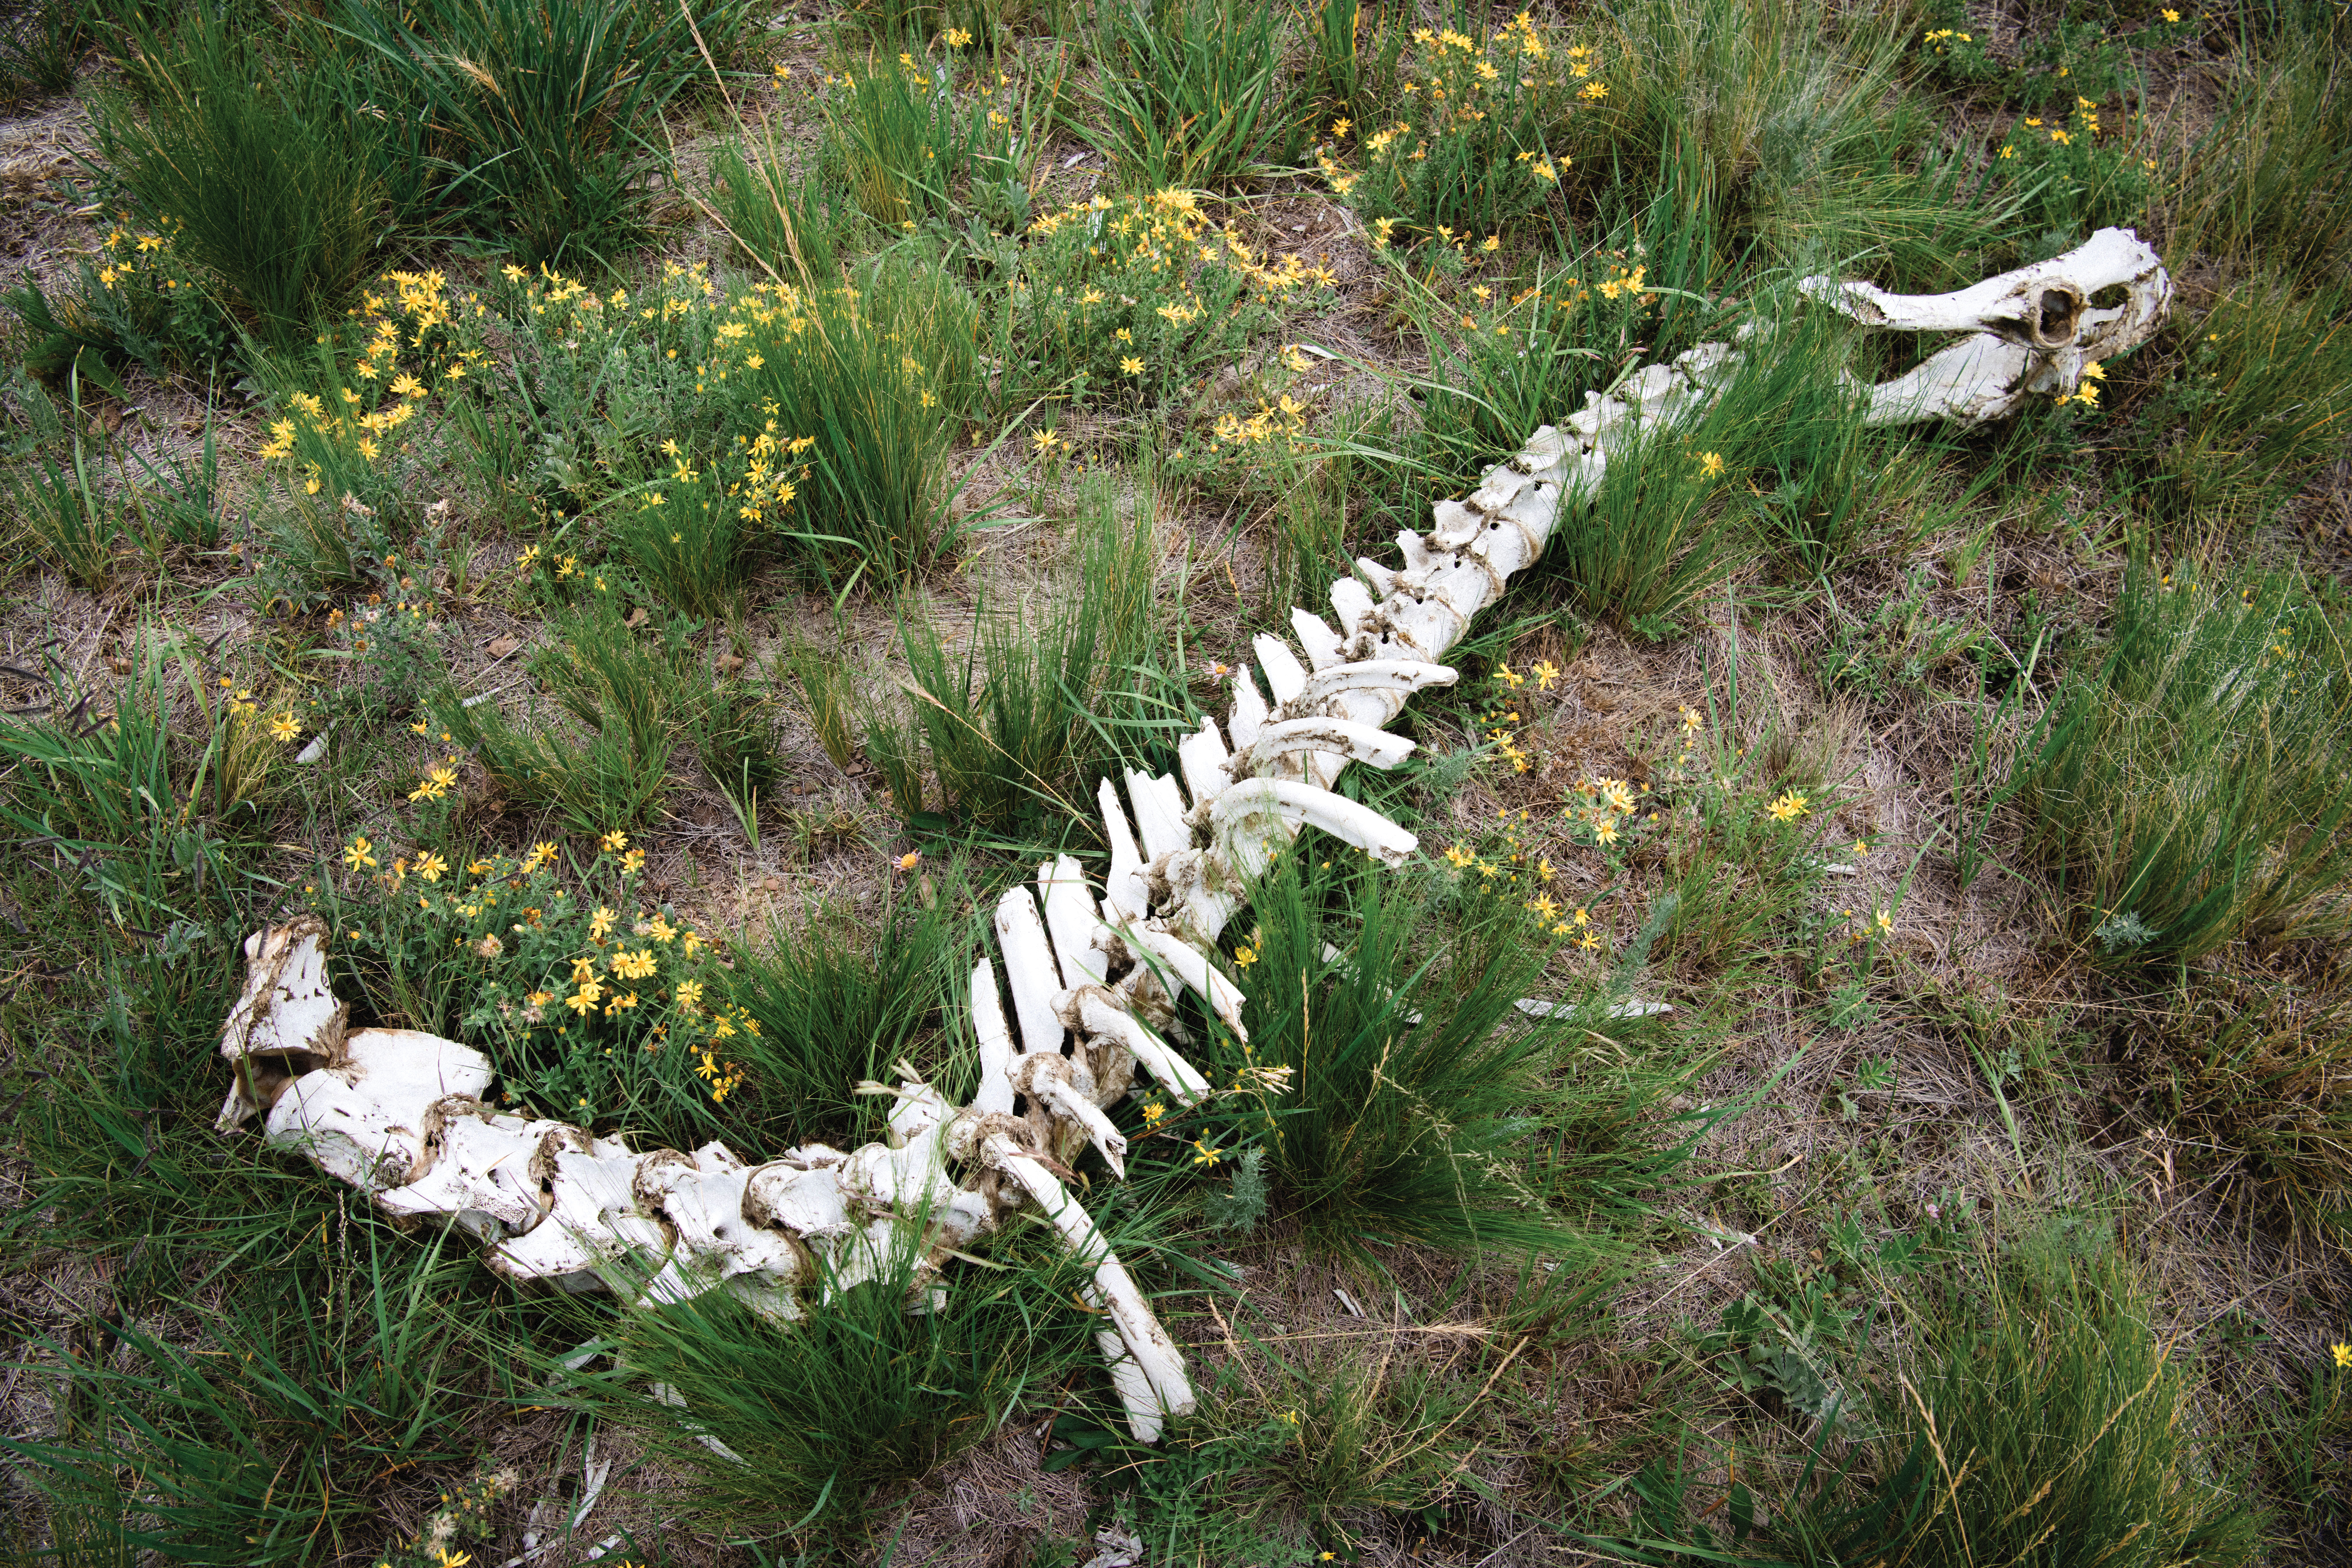 An elk skeleton in the Valles Caldera